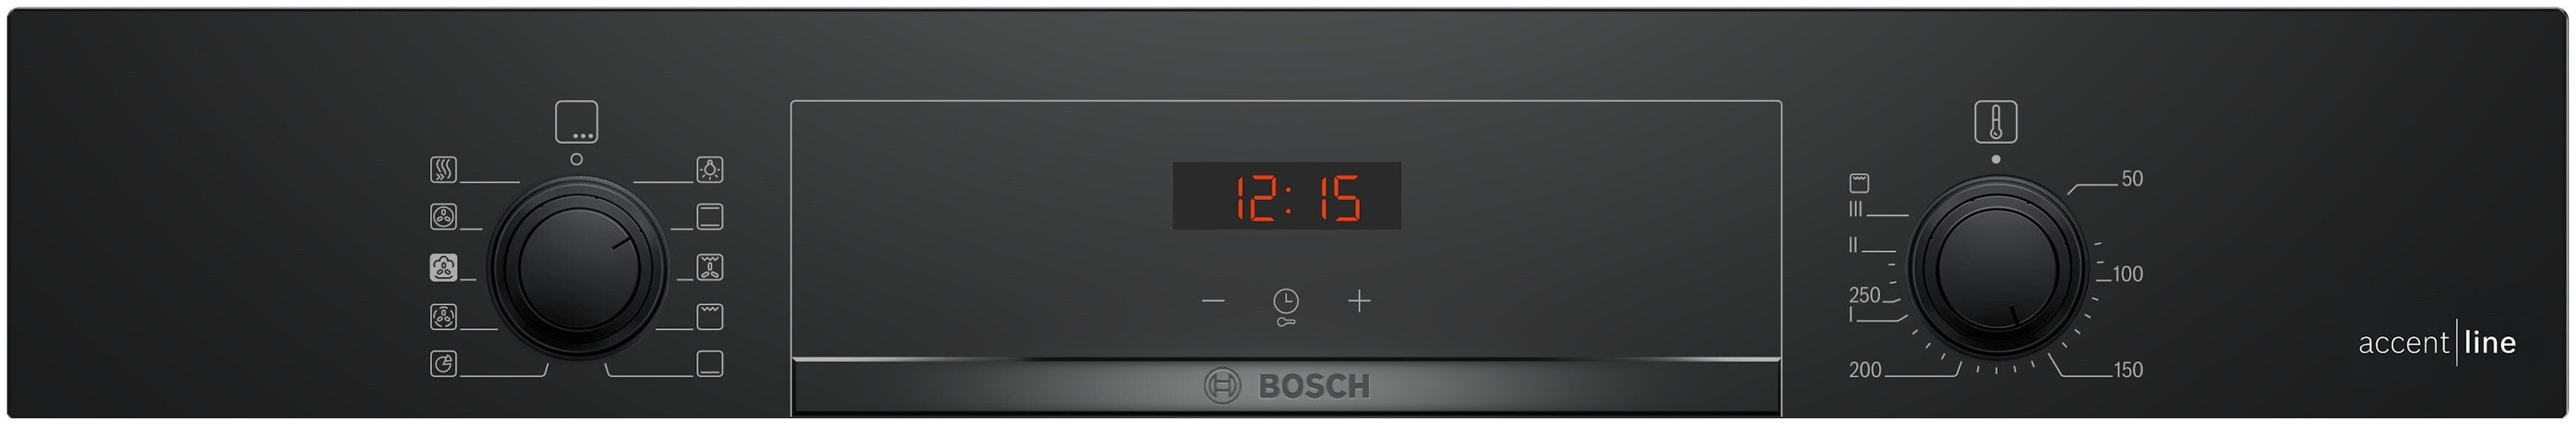 HBA4330B1 Bosch afbeelding 2